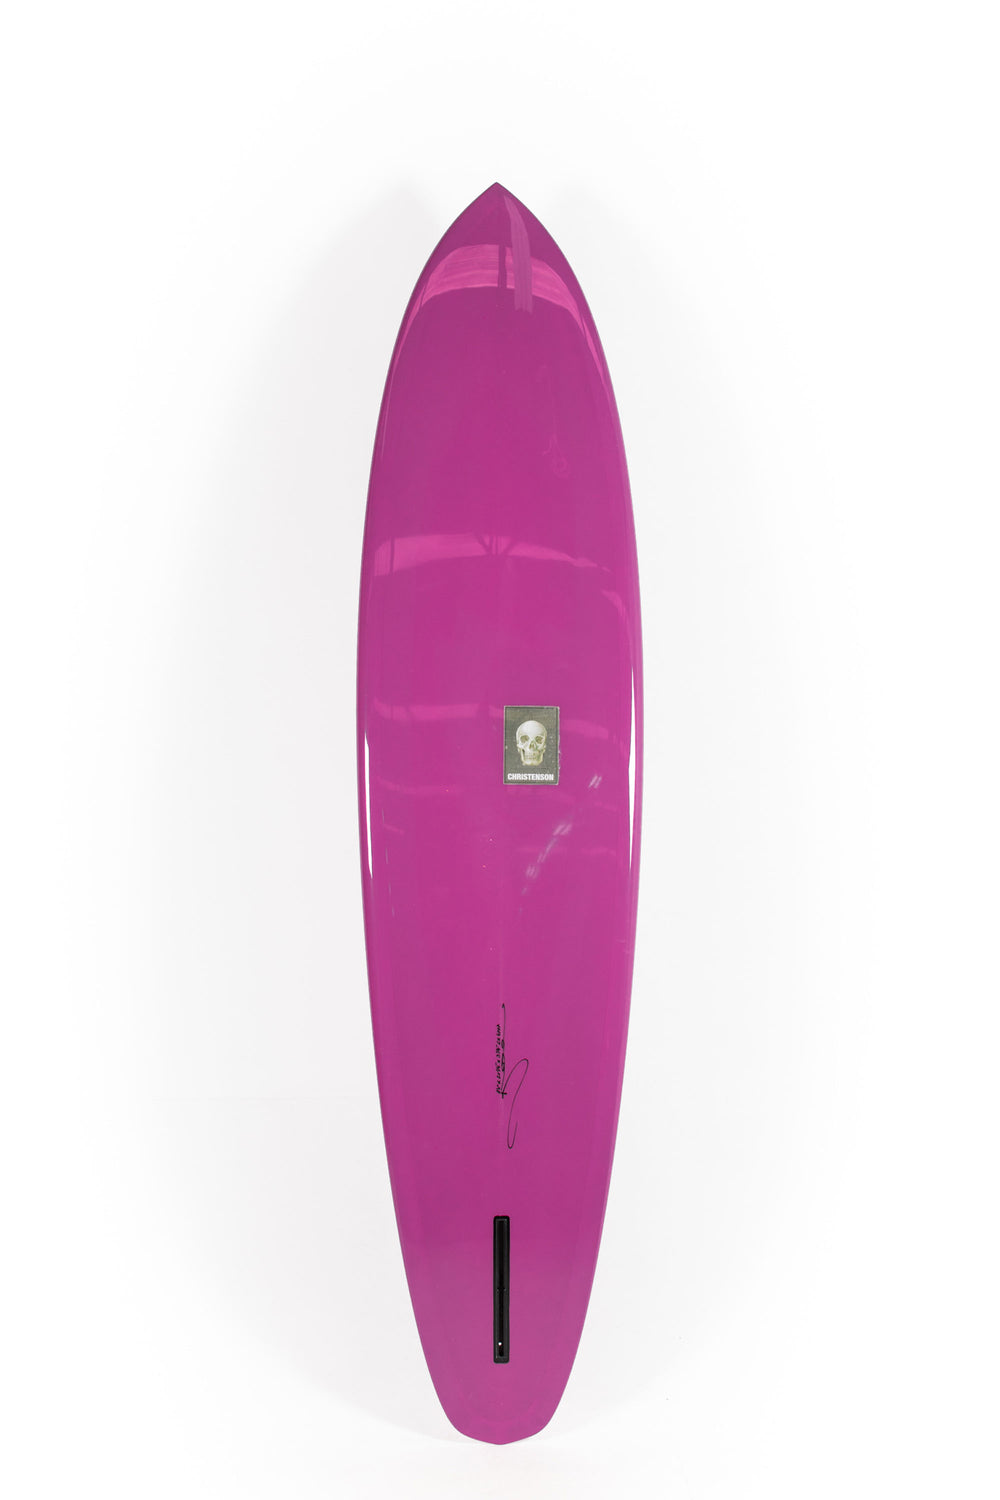 Christenson Surfboards - ULTRA TRACKER - 6'8